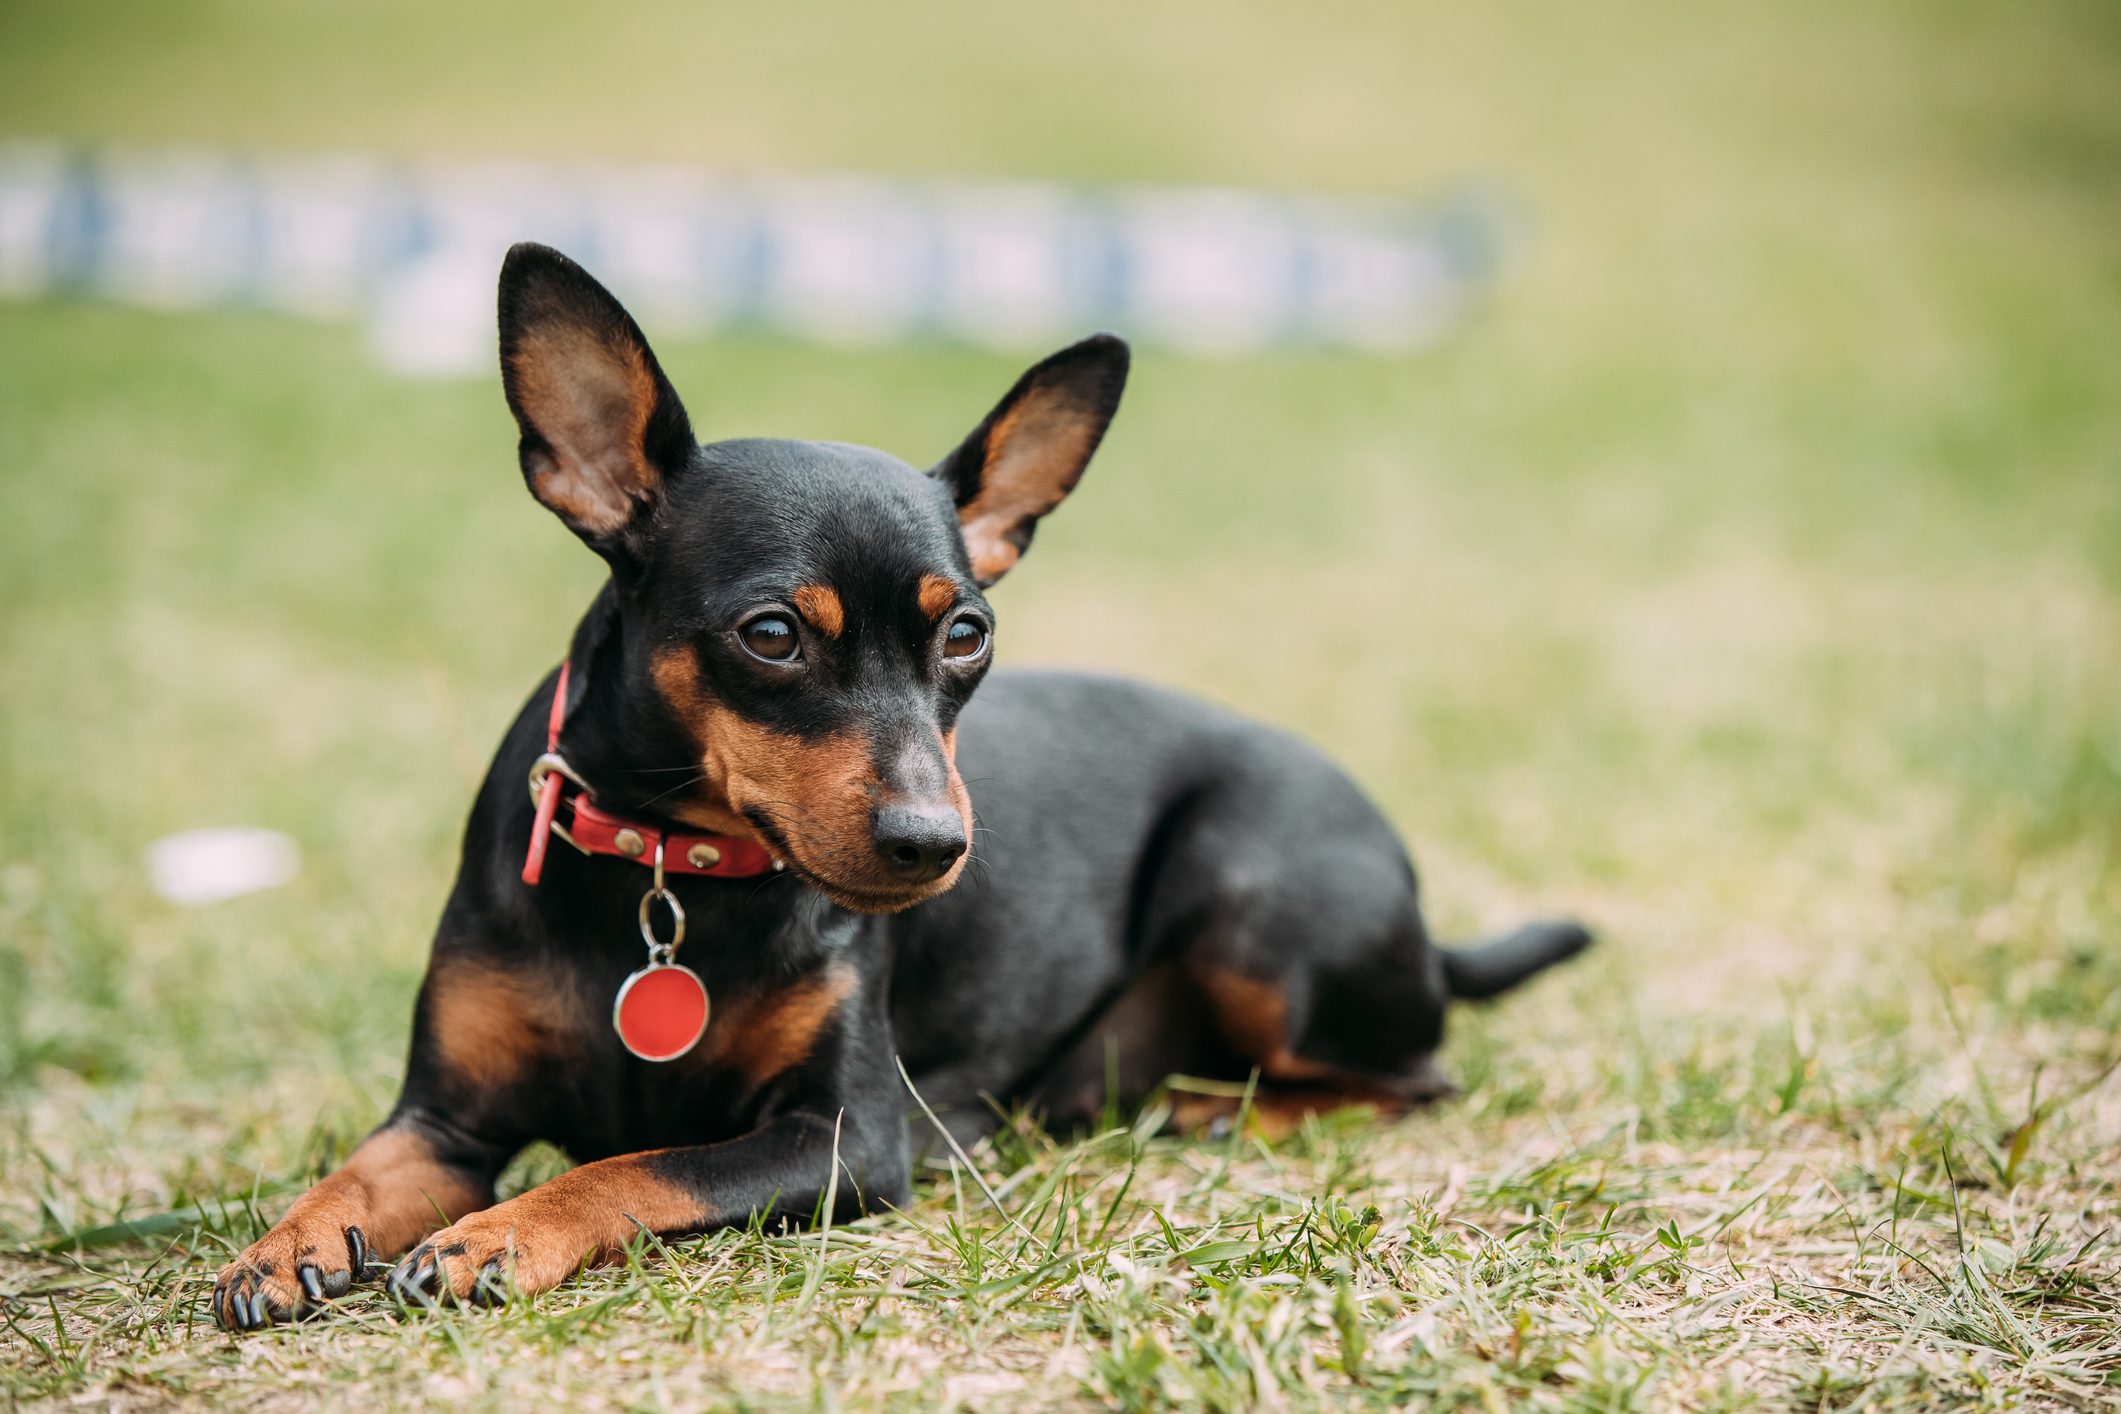 Black Miniature Pinscher dog sitting on grass